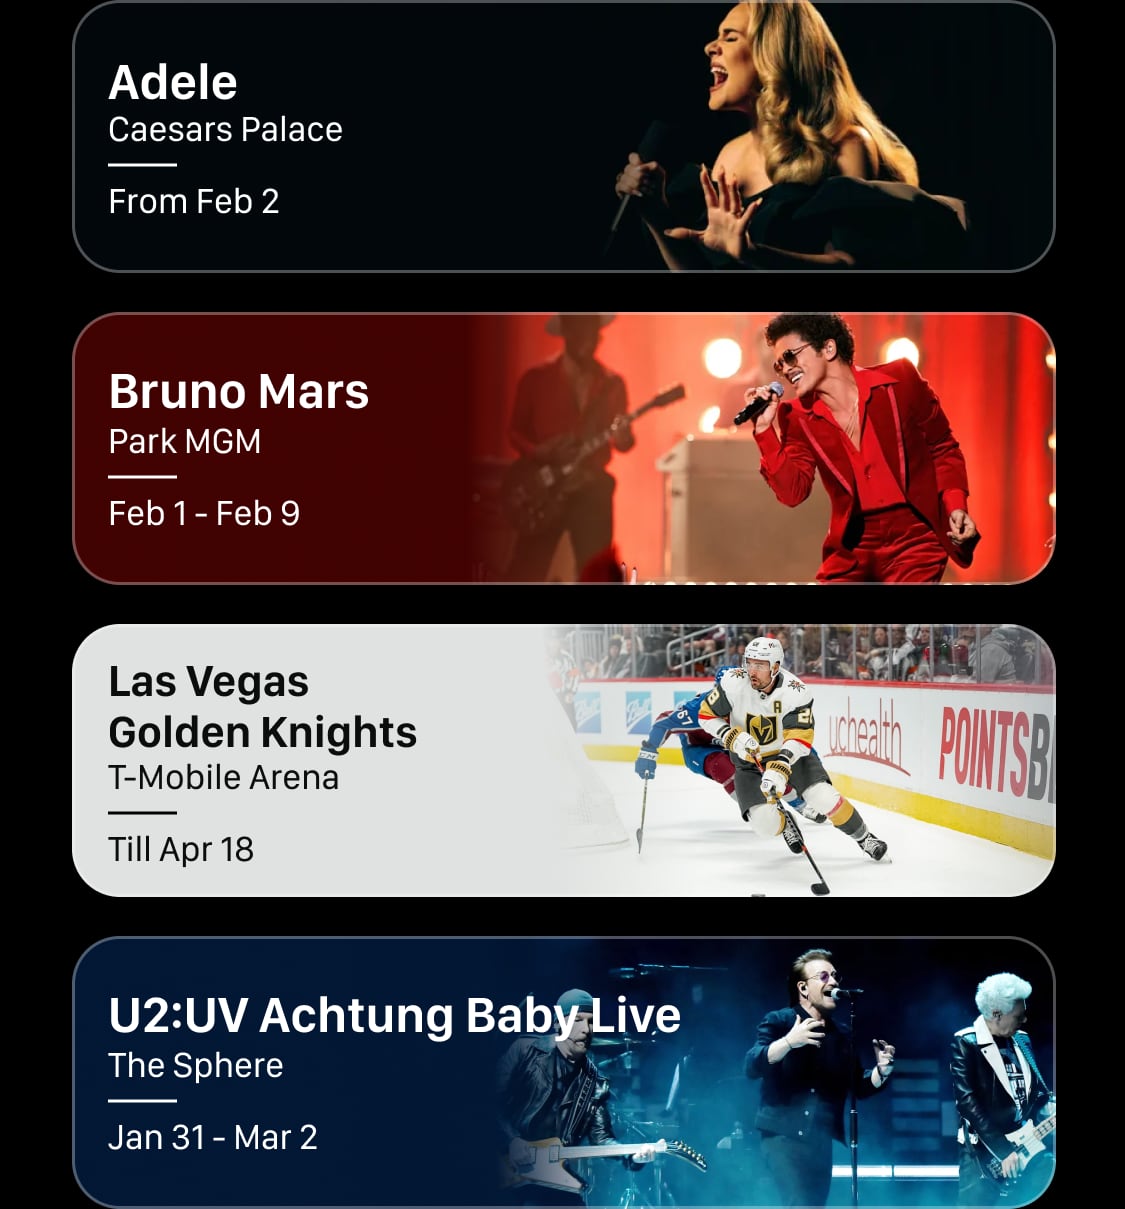 Major events: The Big Game, Adele, Bruno Mars, Las Vegas Golden Knights, U2:UV Achtung Baby Live